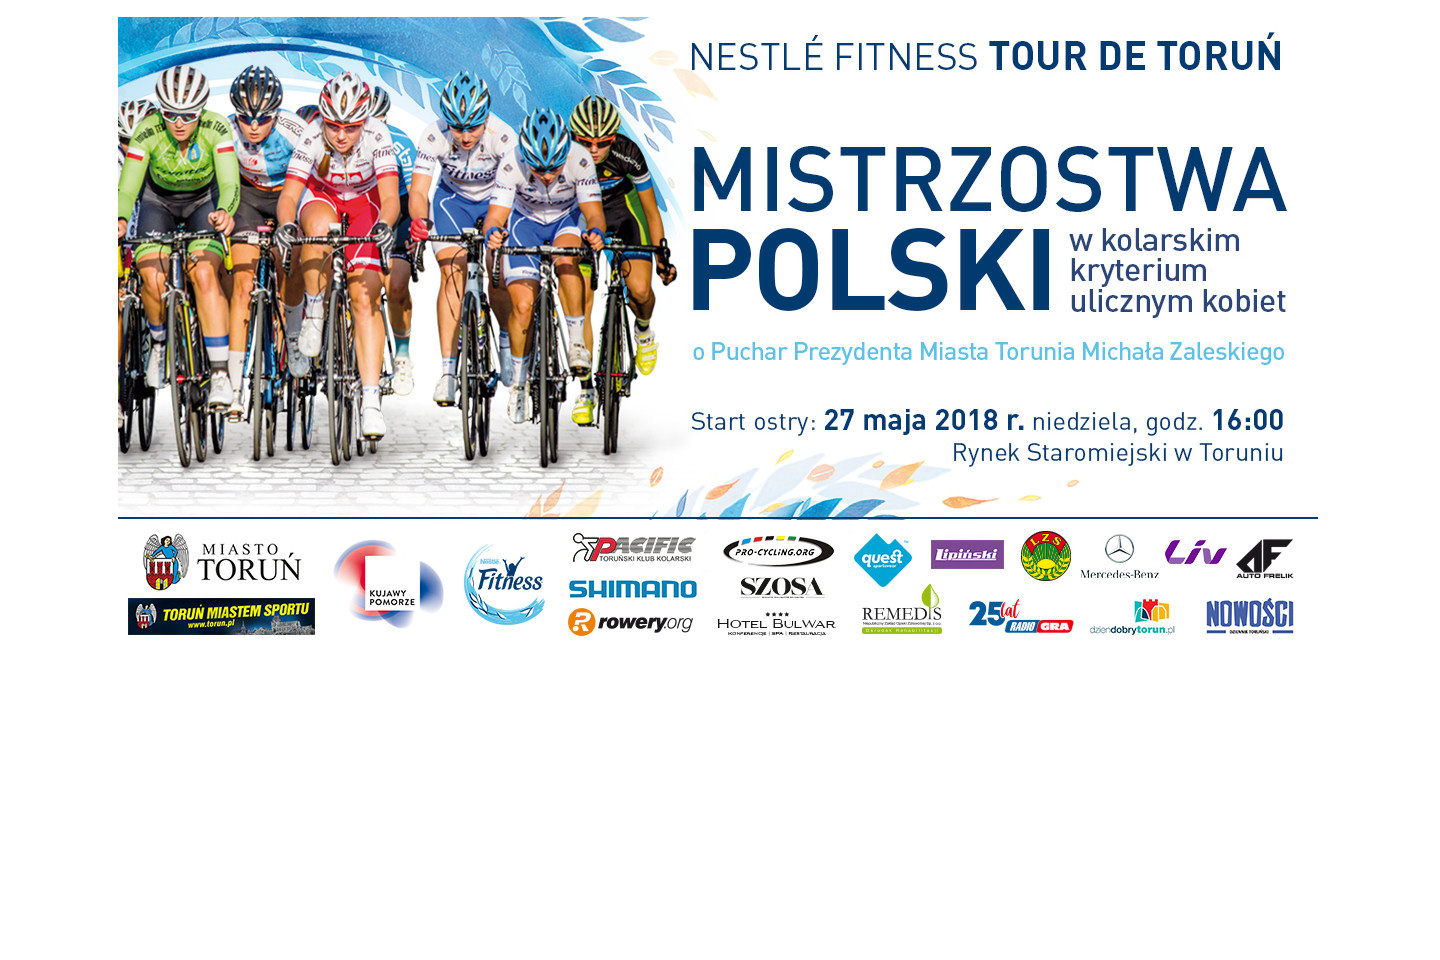 Nestlé Fitness Tour de Toruń już w niedzielę